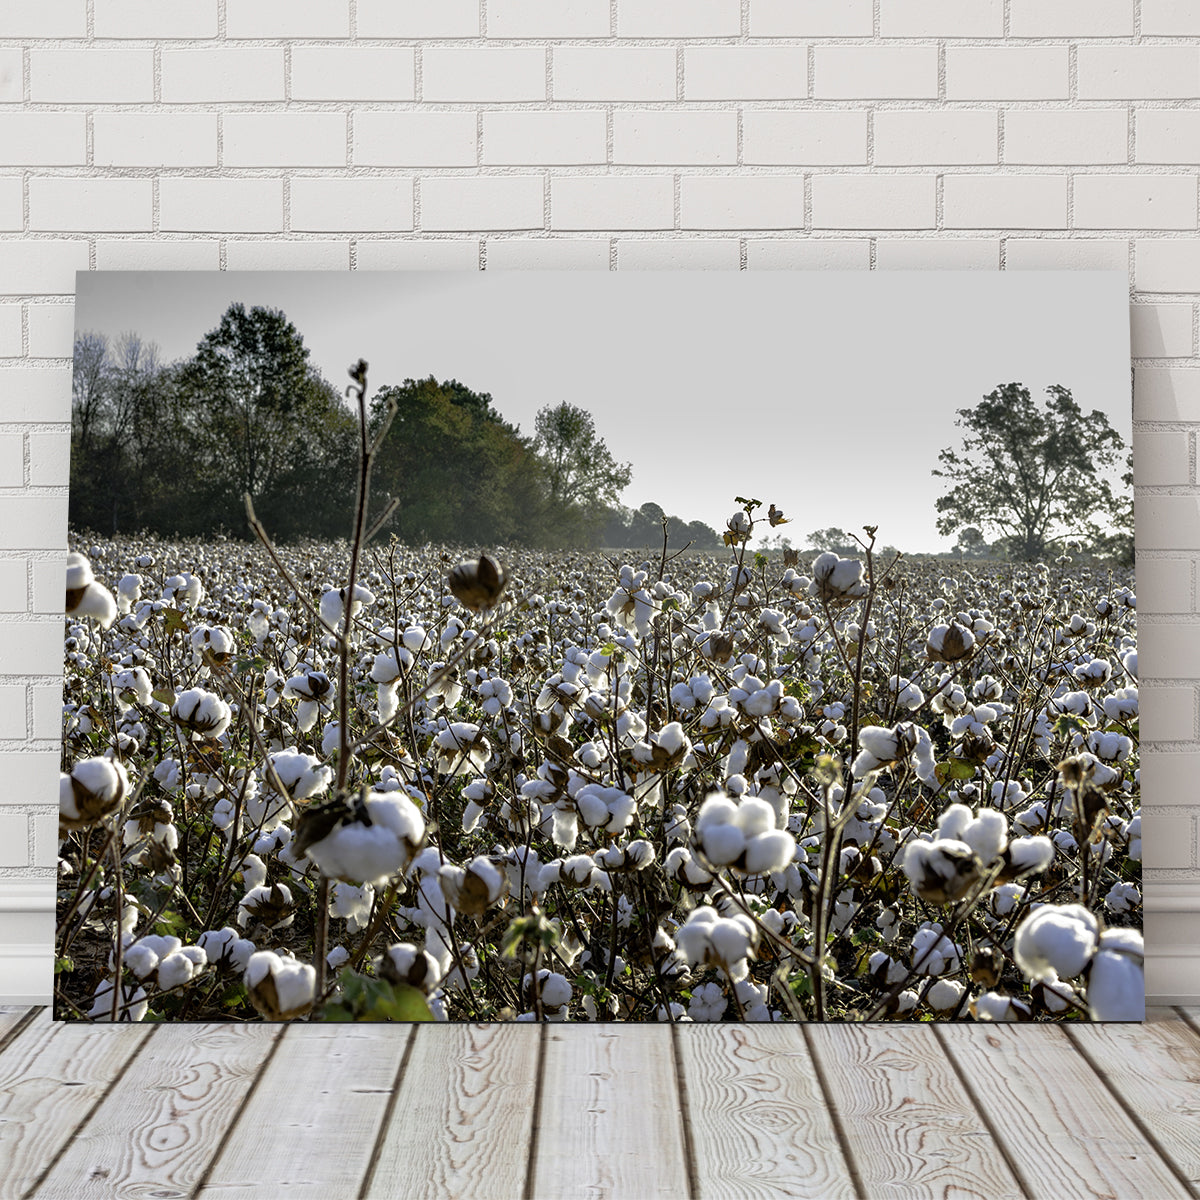 Alabama Cotton Field